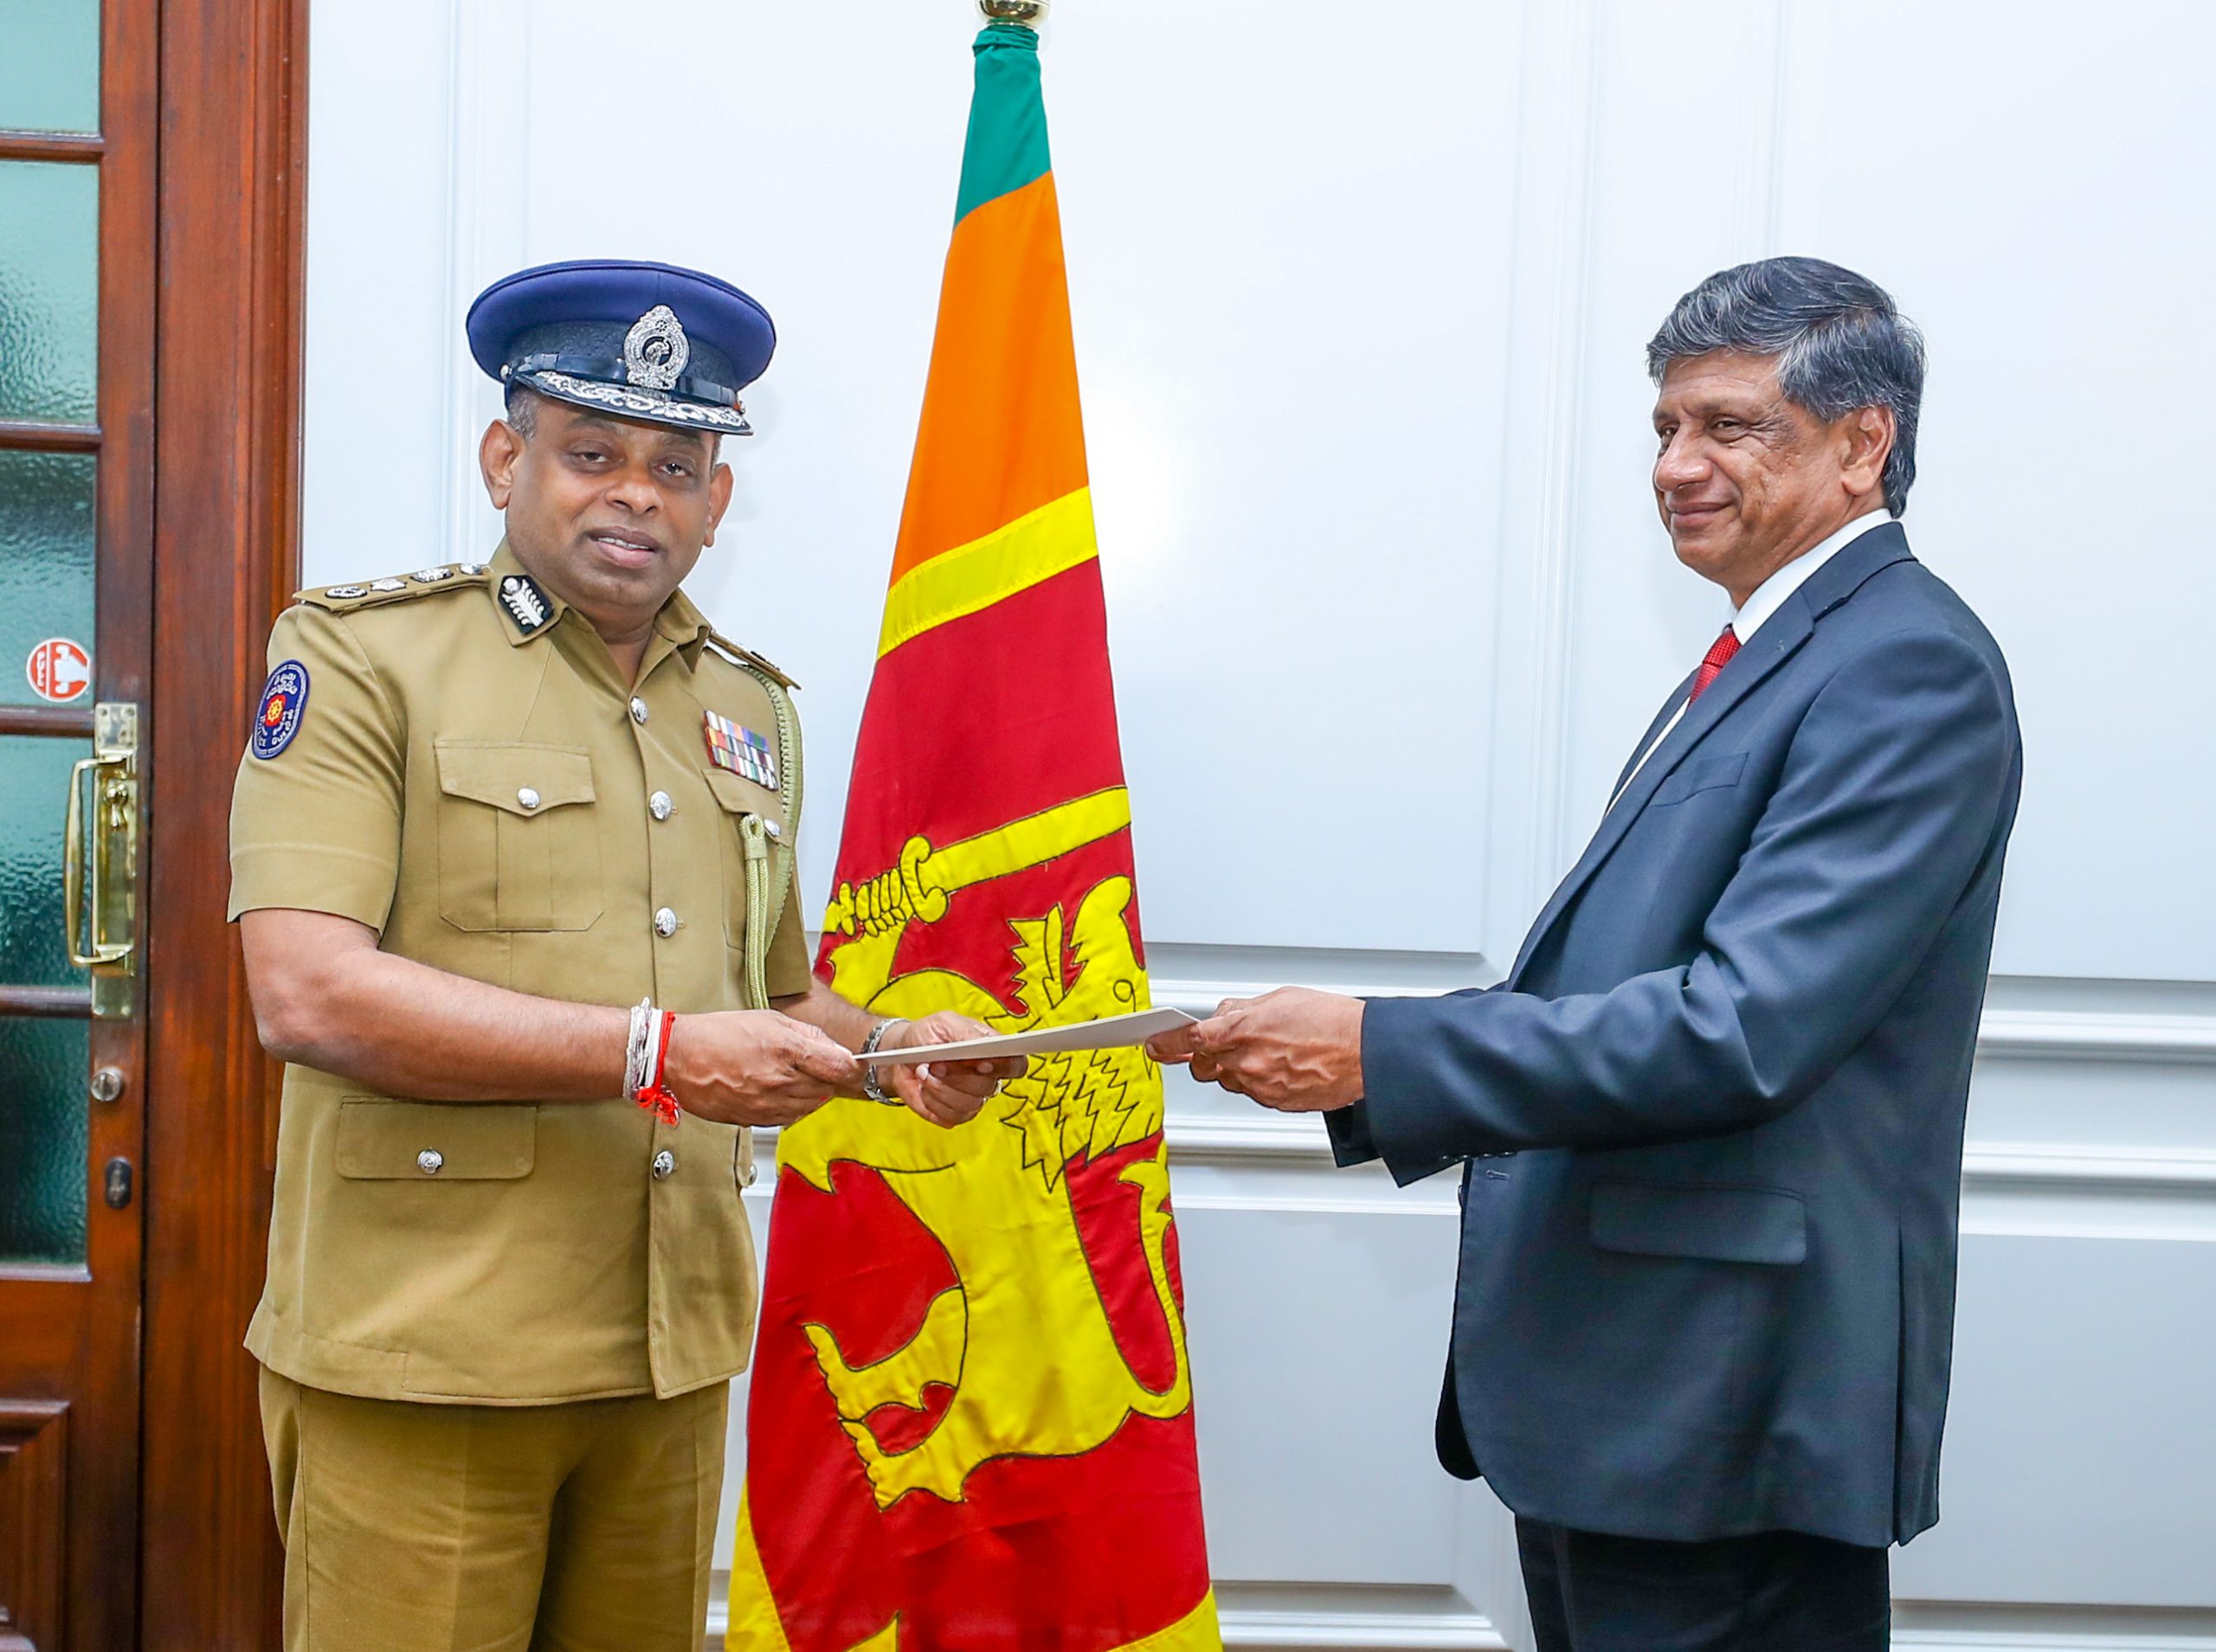 Deshabandu Tennakoon was appointed as the IGP in Sri Lanka